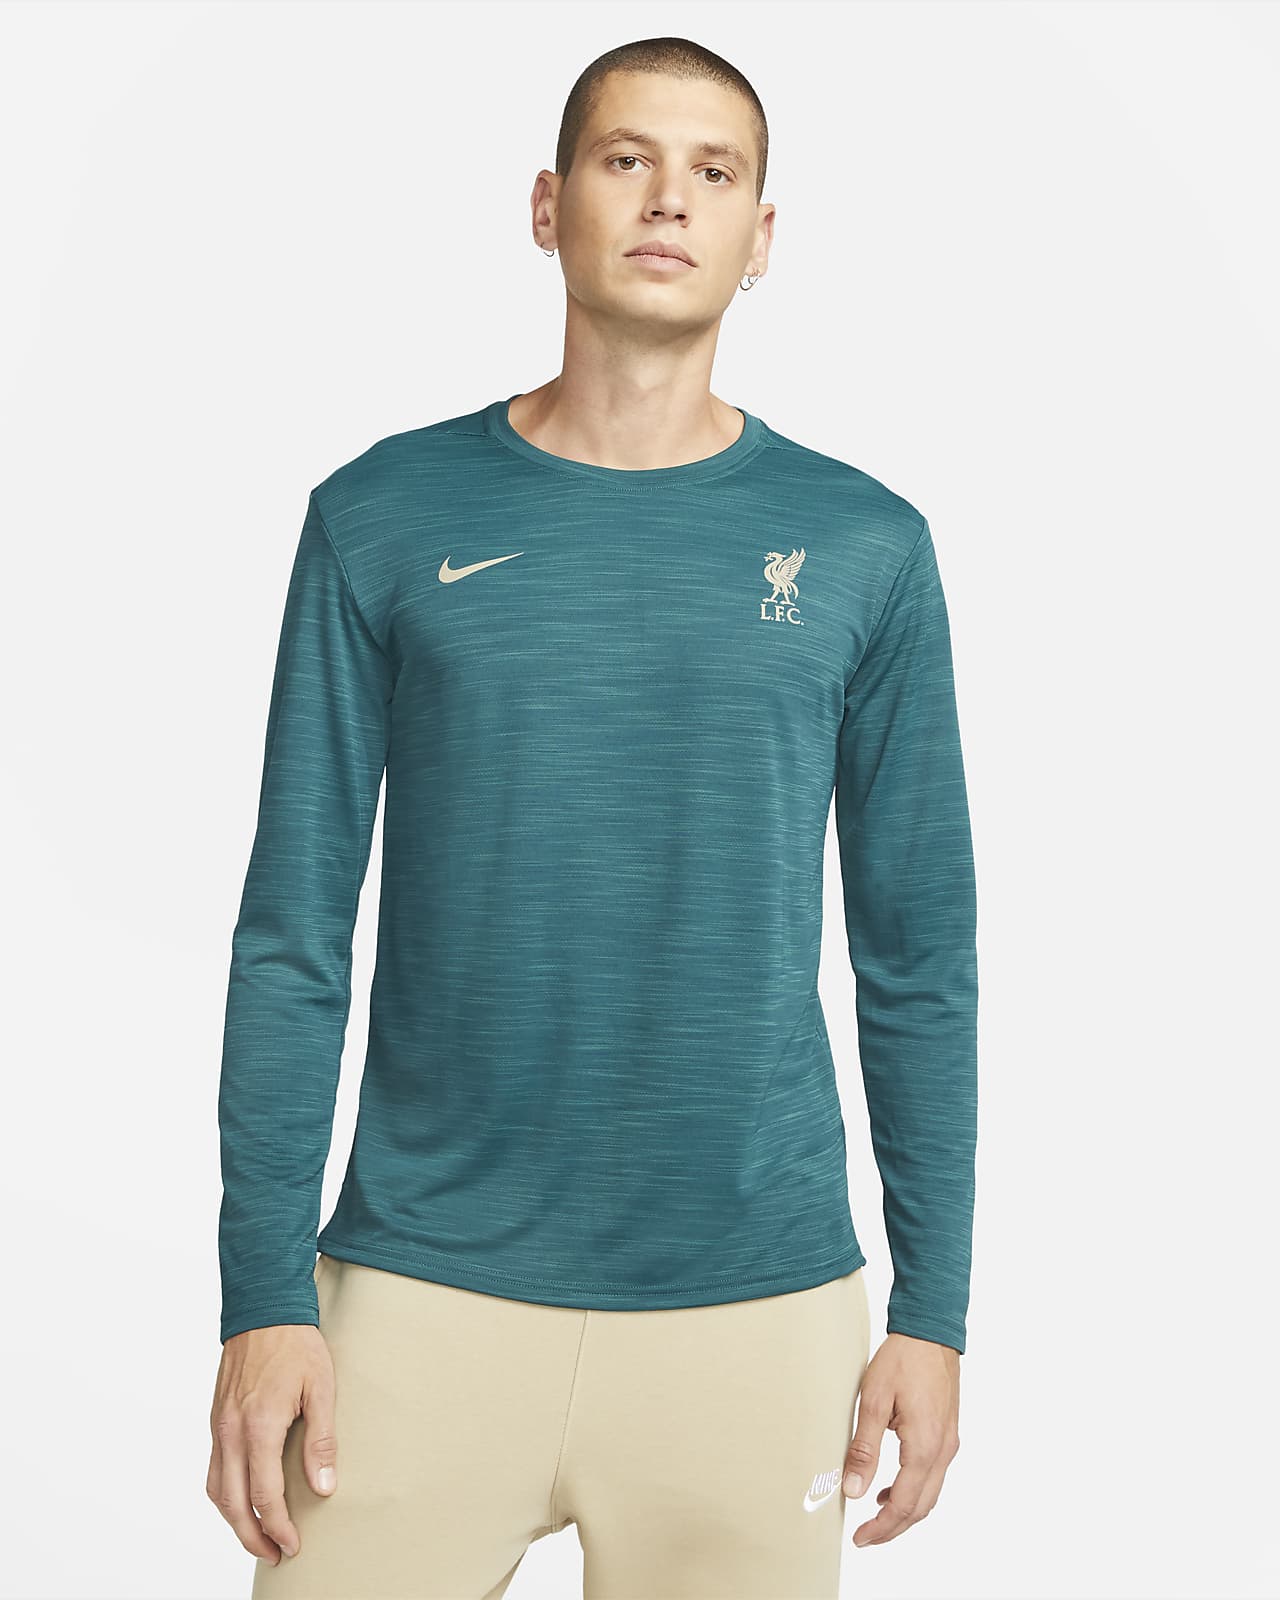 Liverpool FC Superset Men's Nike Dri-FIT Long-Sleeve Top